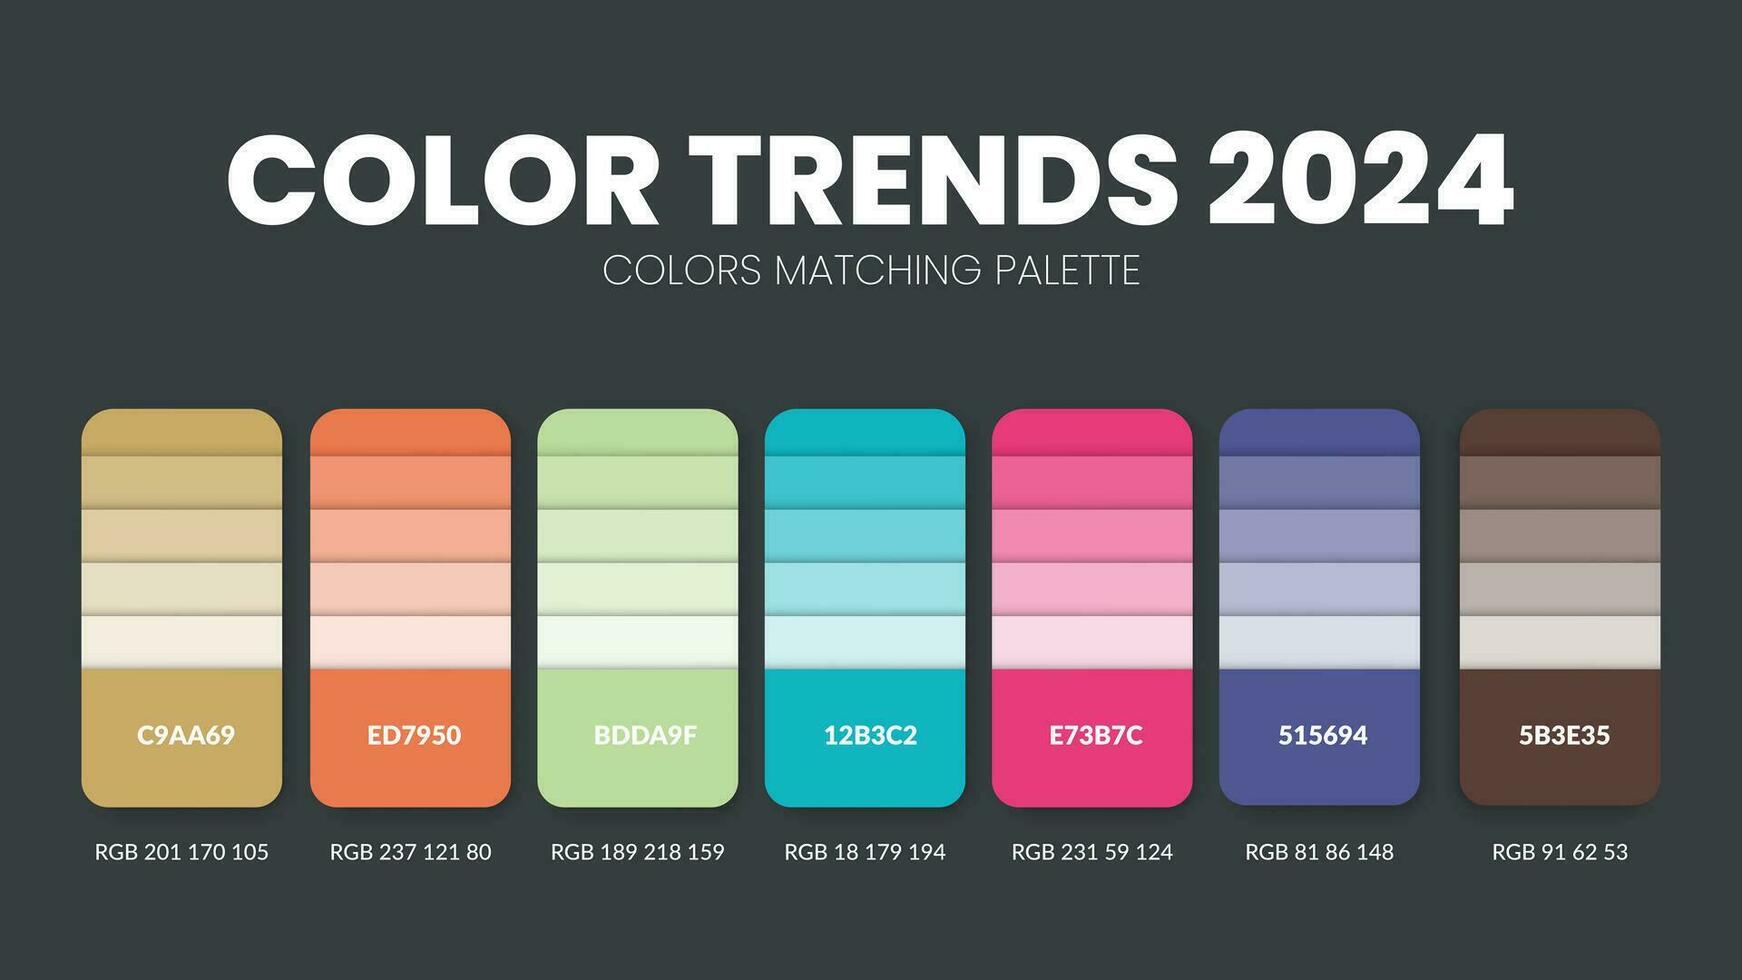 2024 color trends. Color palette in vibrant, bold, earthy tones. Colour